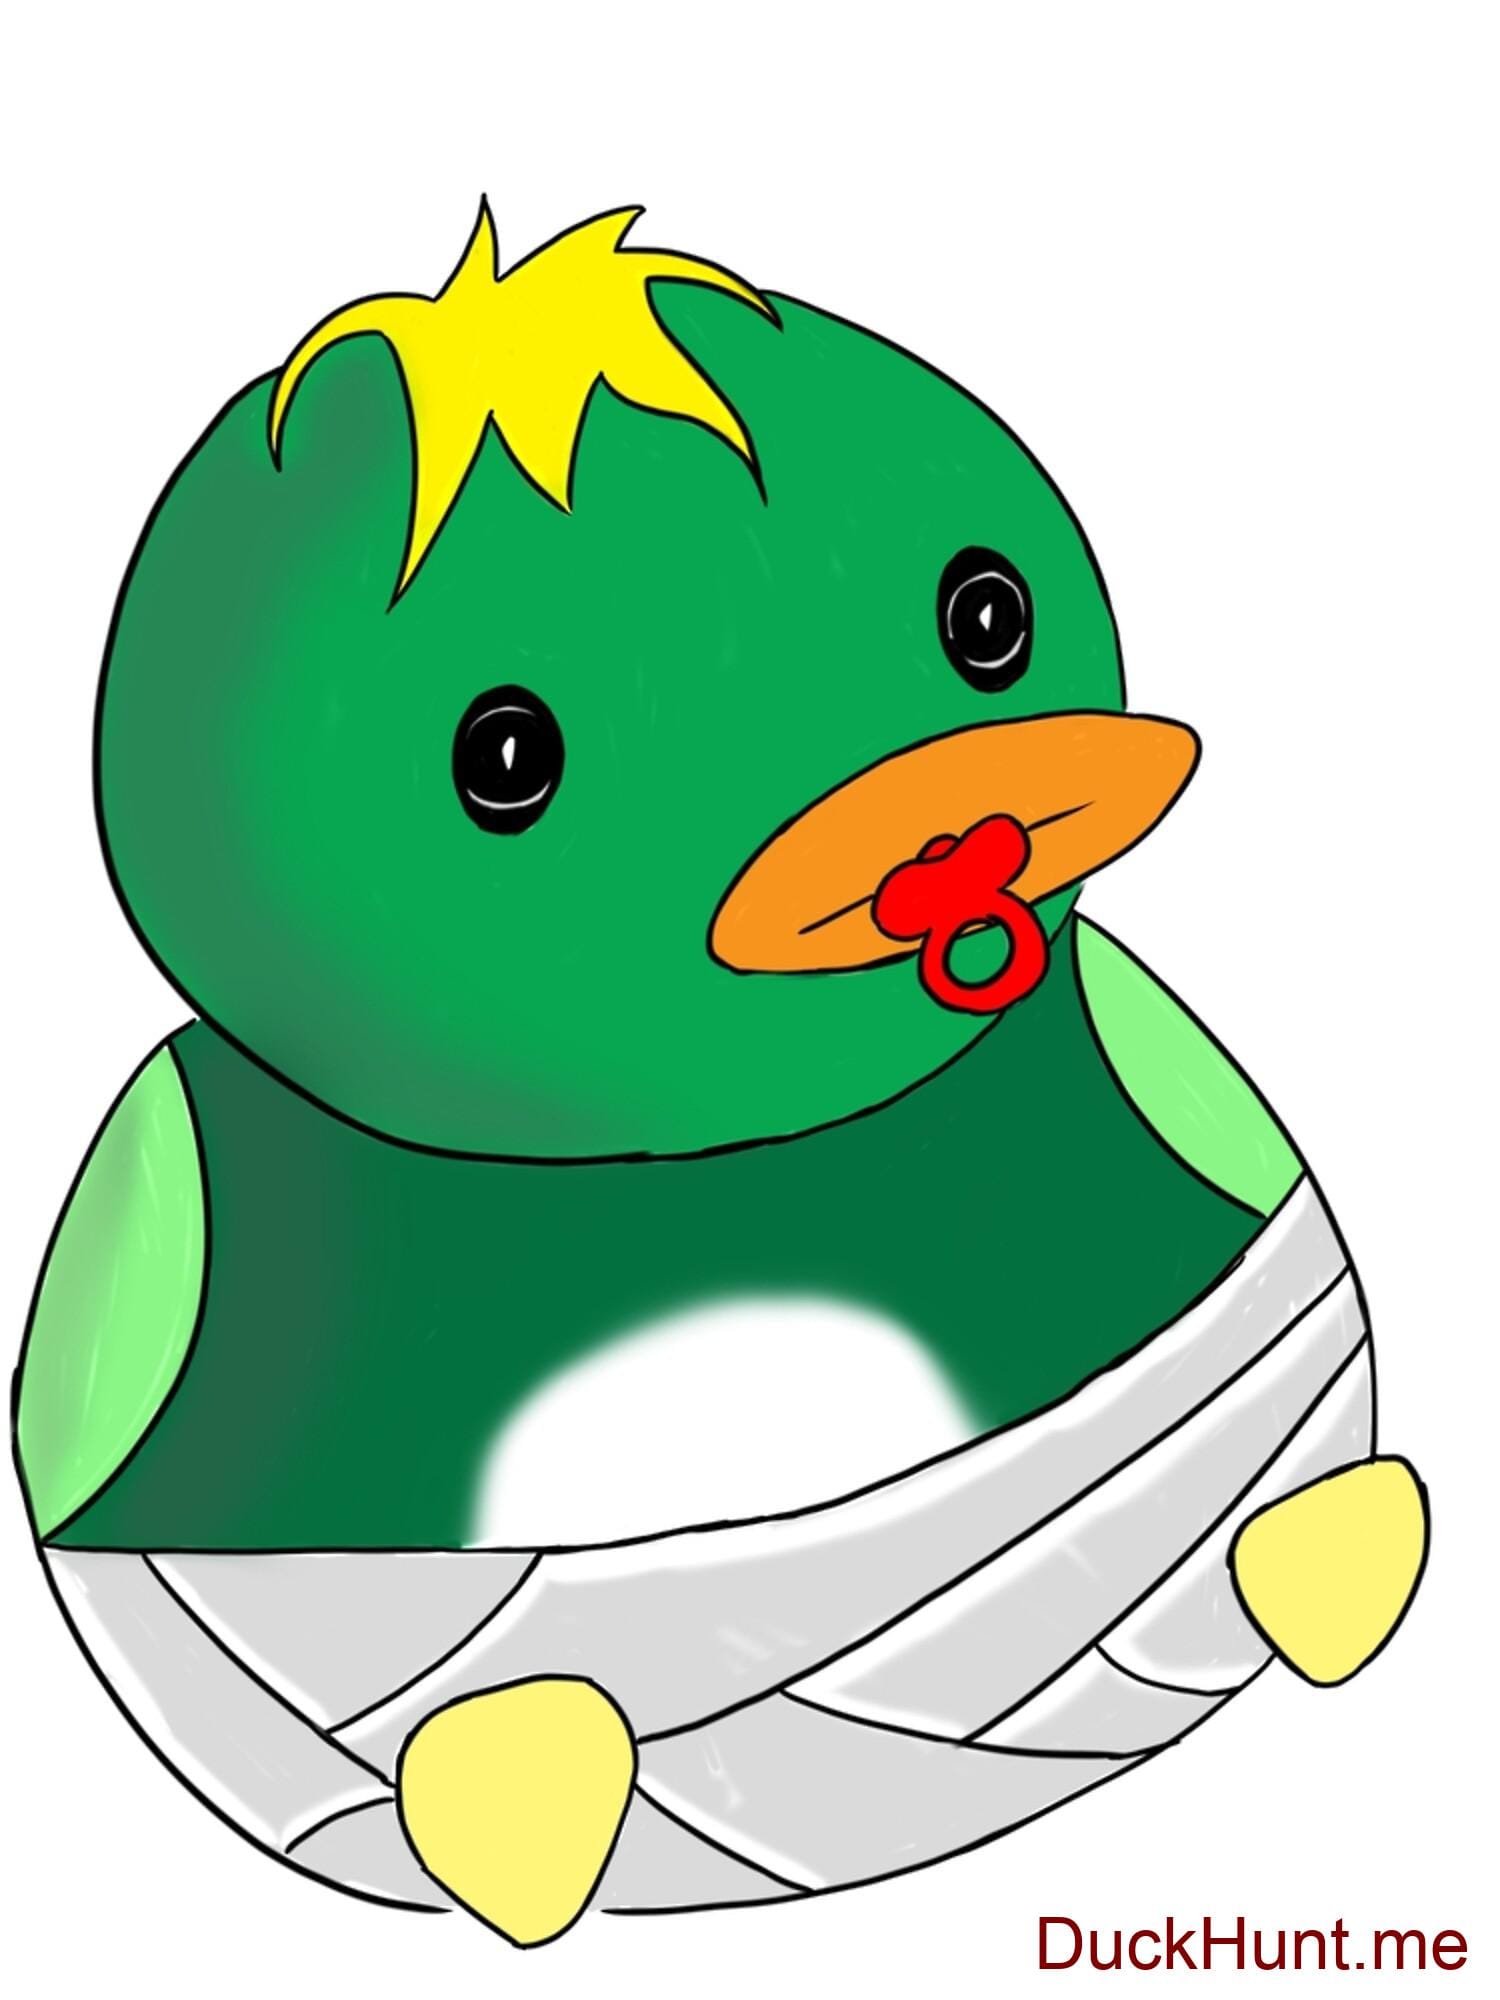 Baby duck Scarf alternative image 2